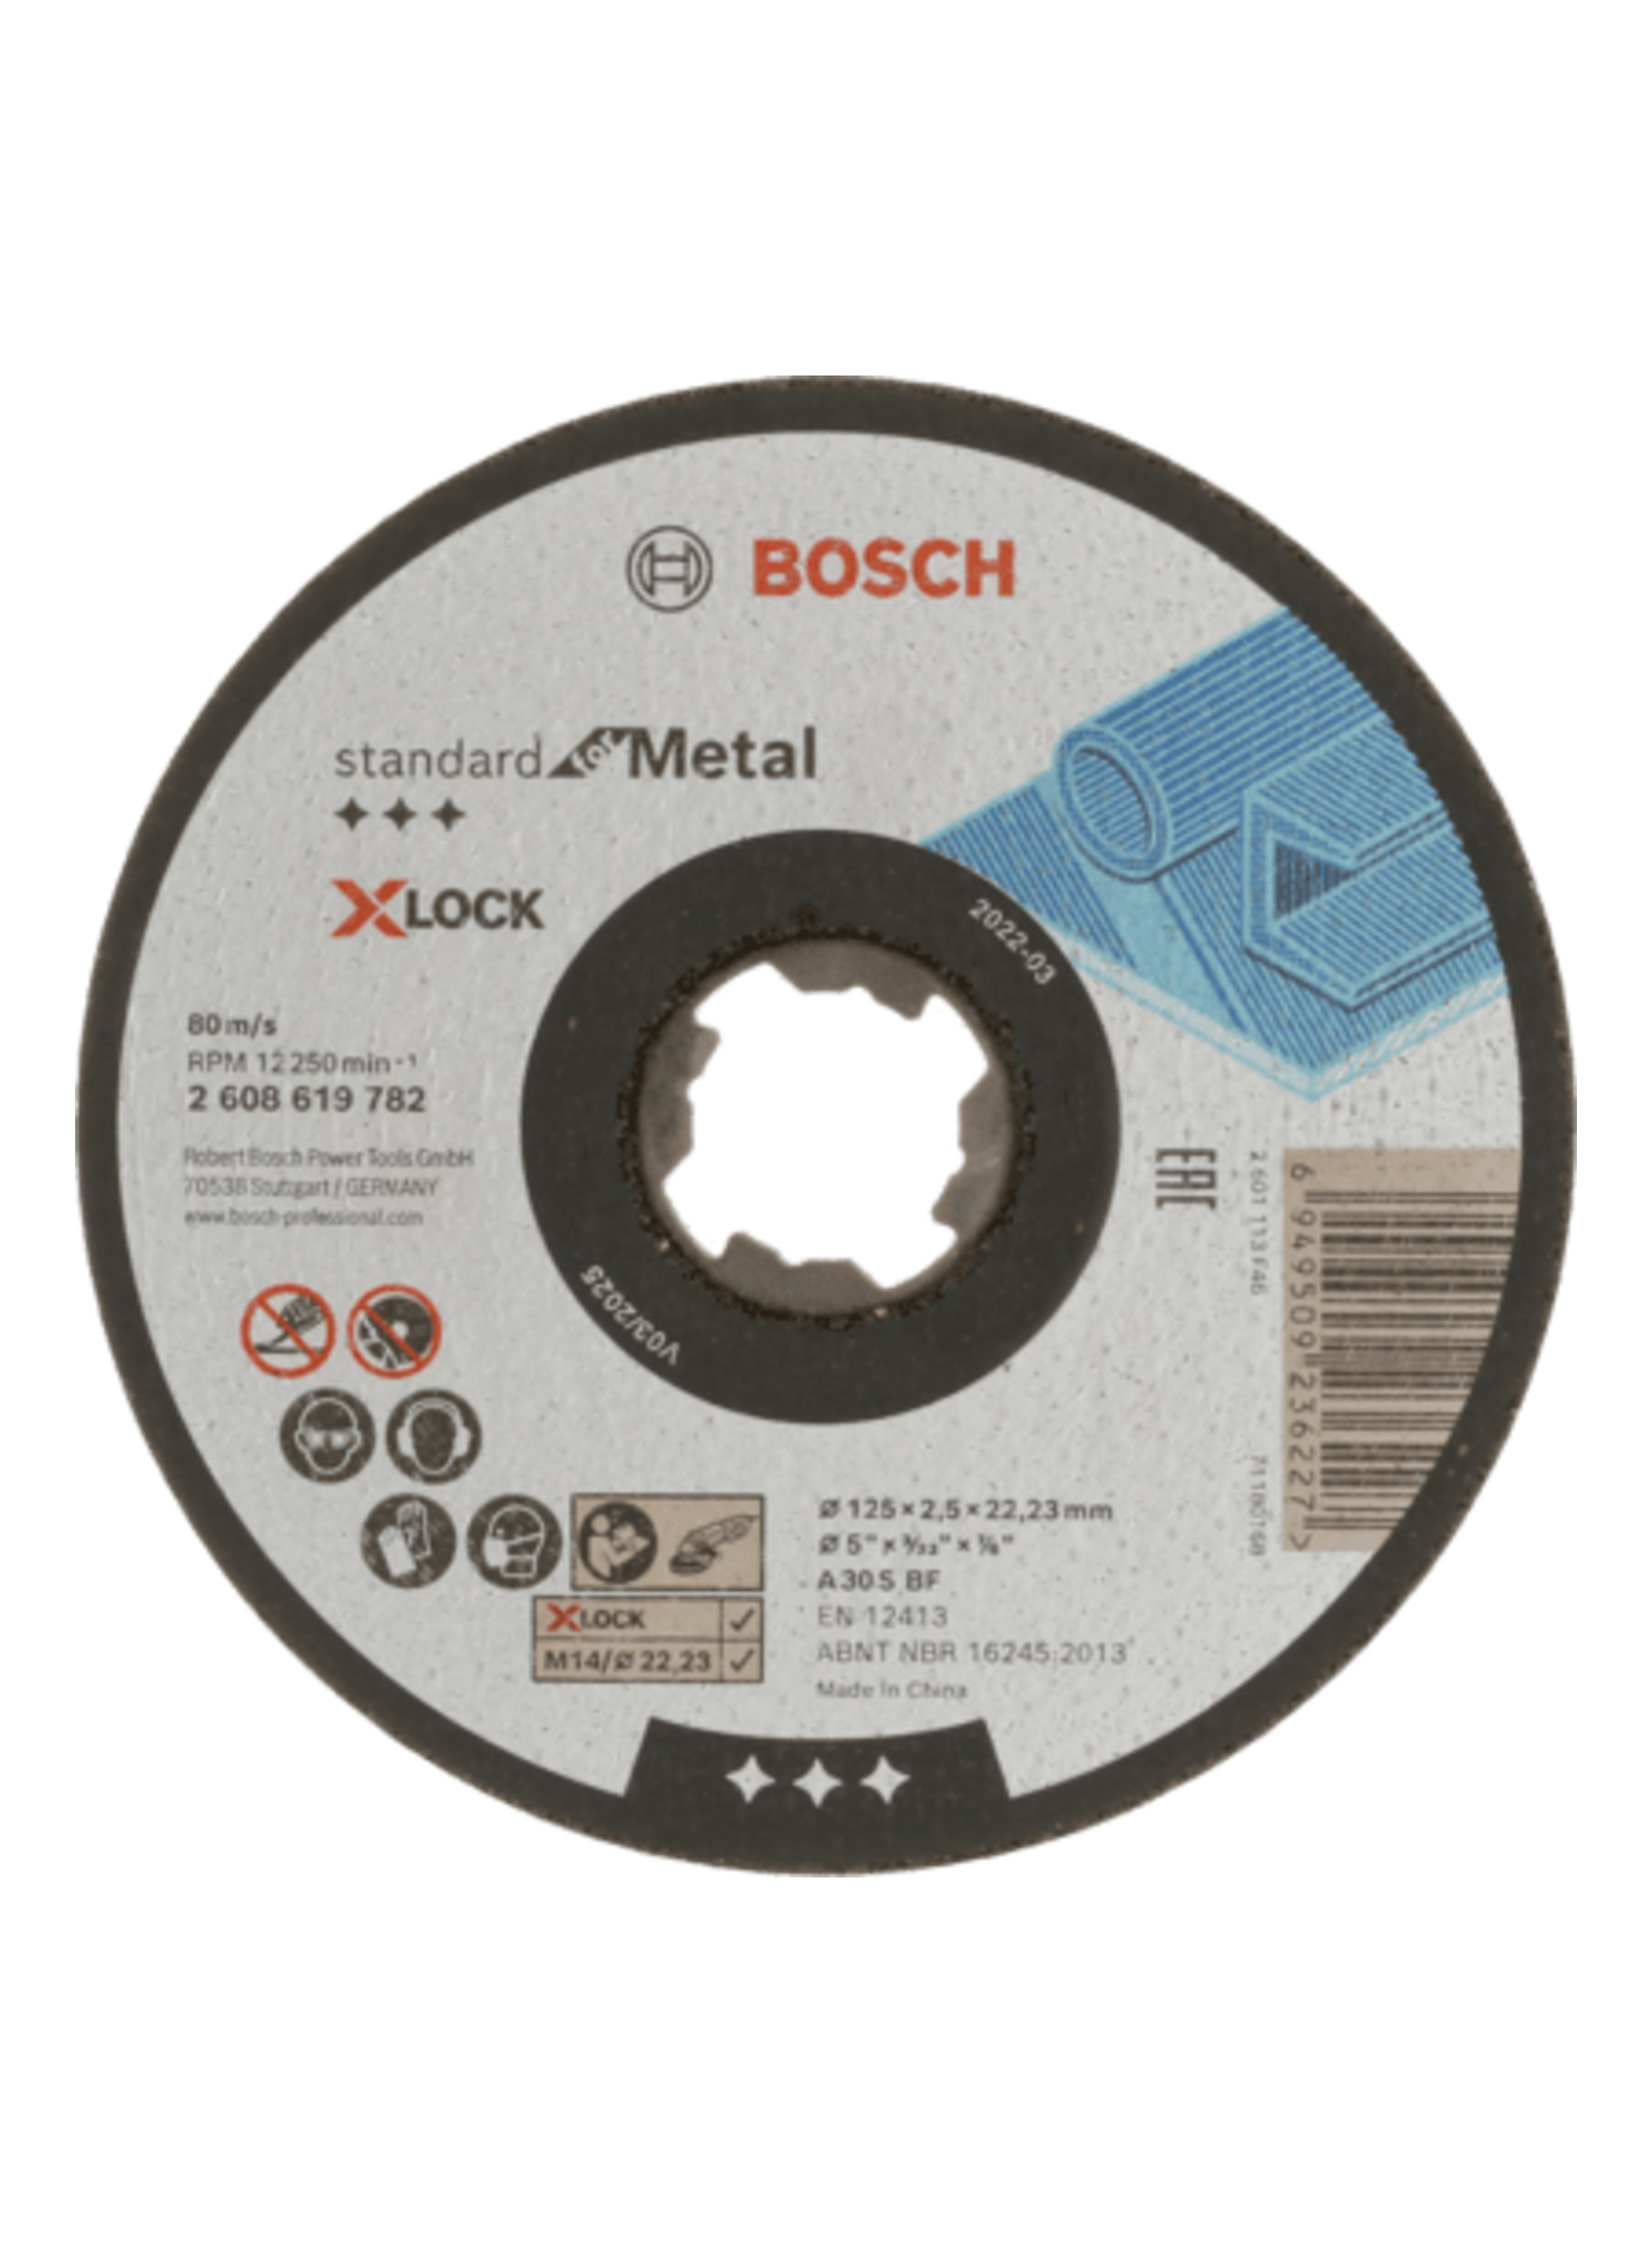 BOSCH X-LOCK CUT-OFF WHEEL STANDARD FOR METAL